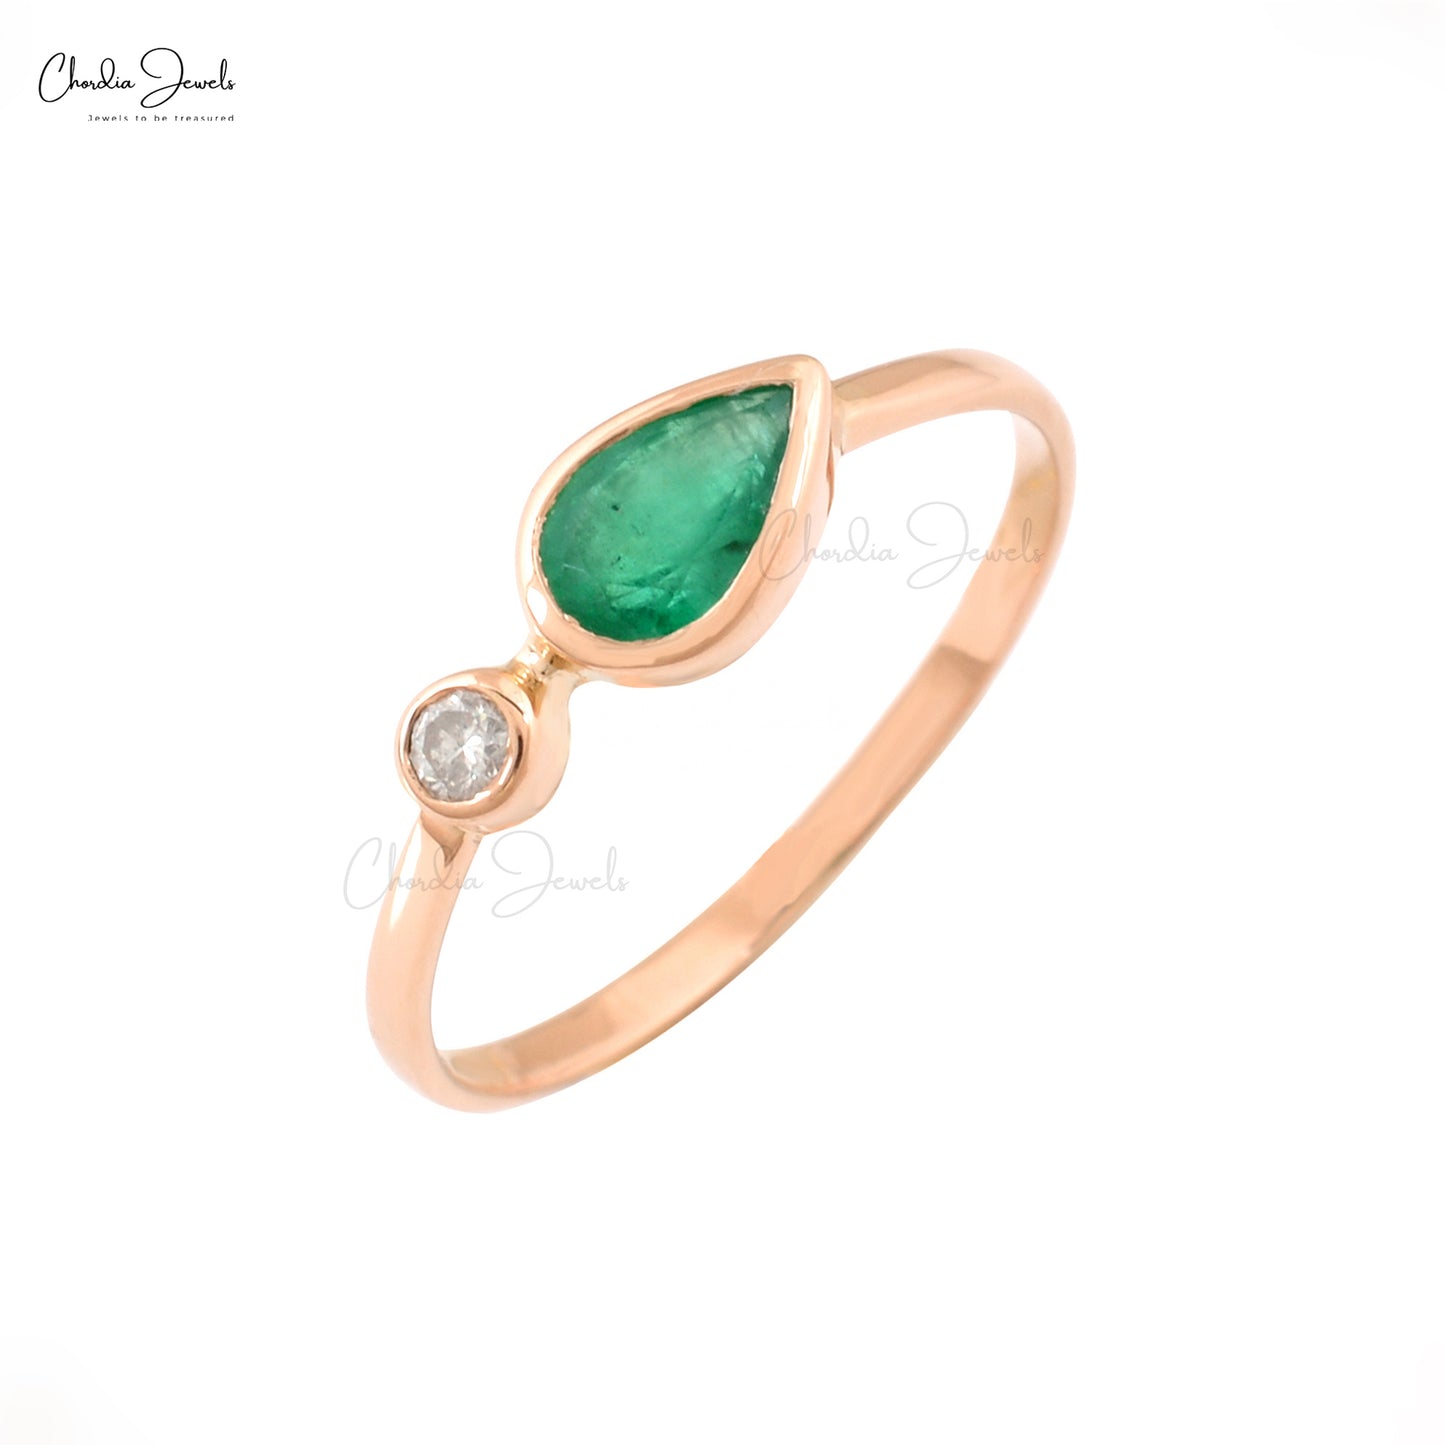 Two Stone Bezel Set 14k Rose Gold With Emerald & Diamond Wedding Rings For Women